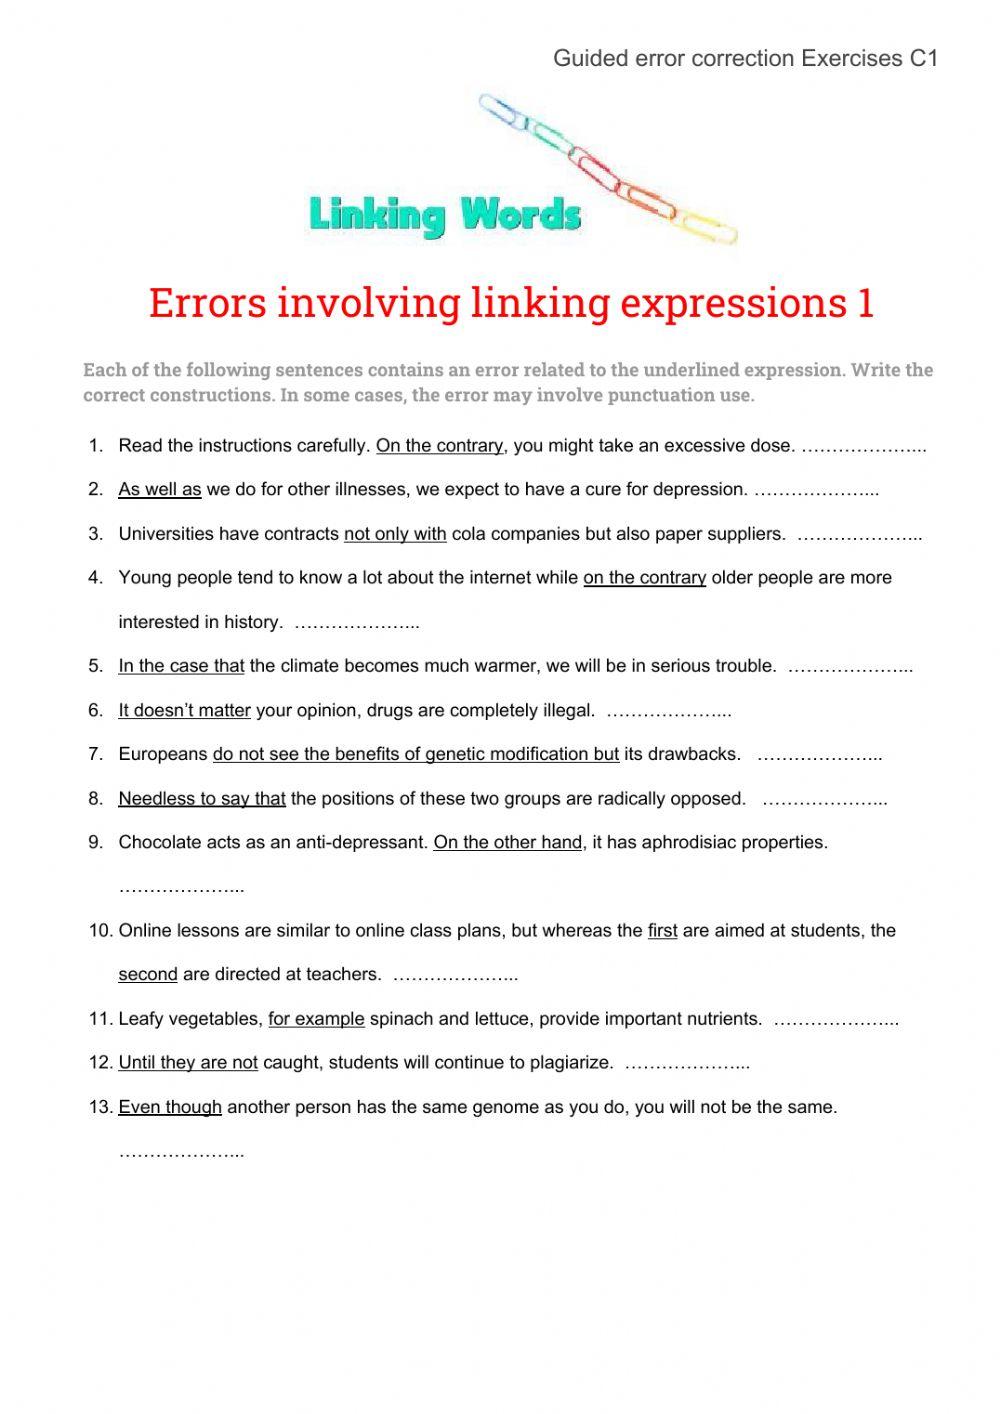 Errors involving linking expressions